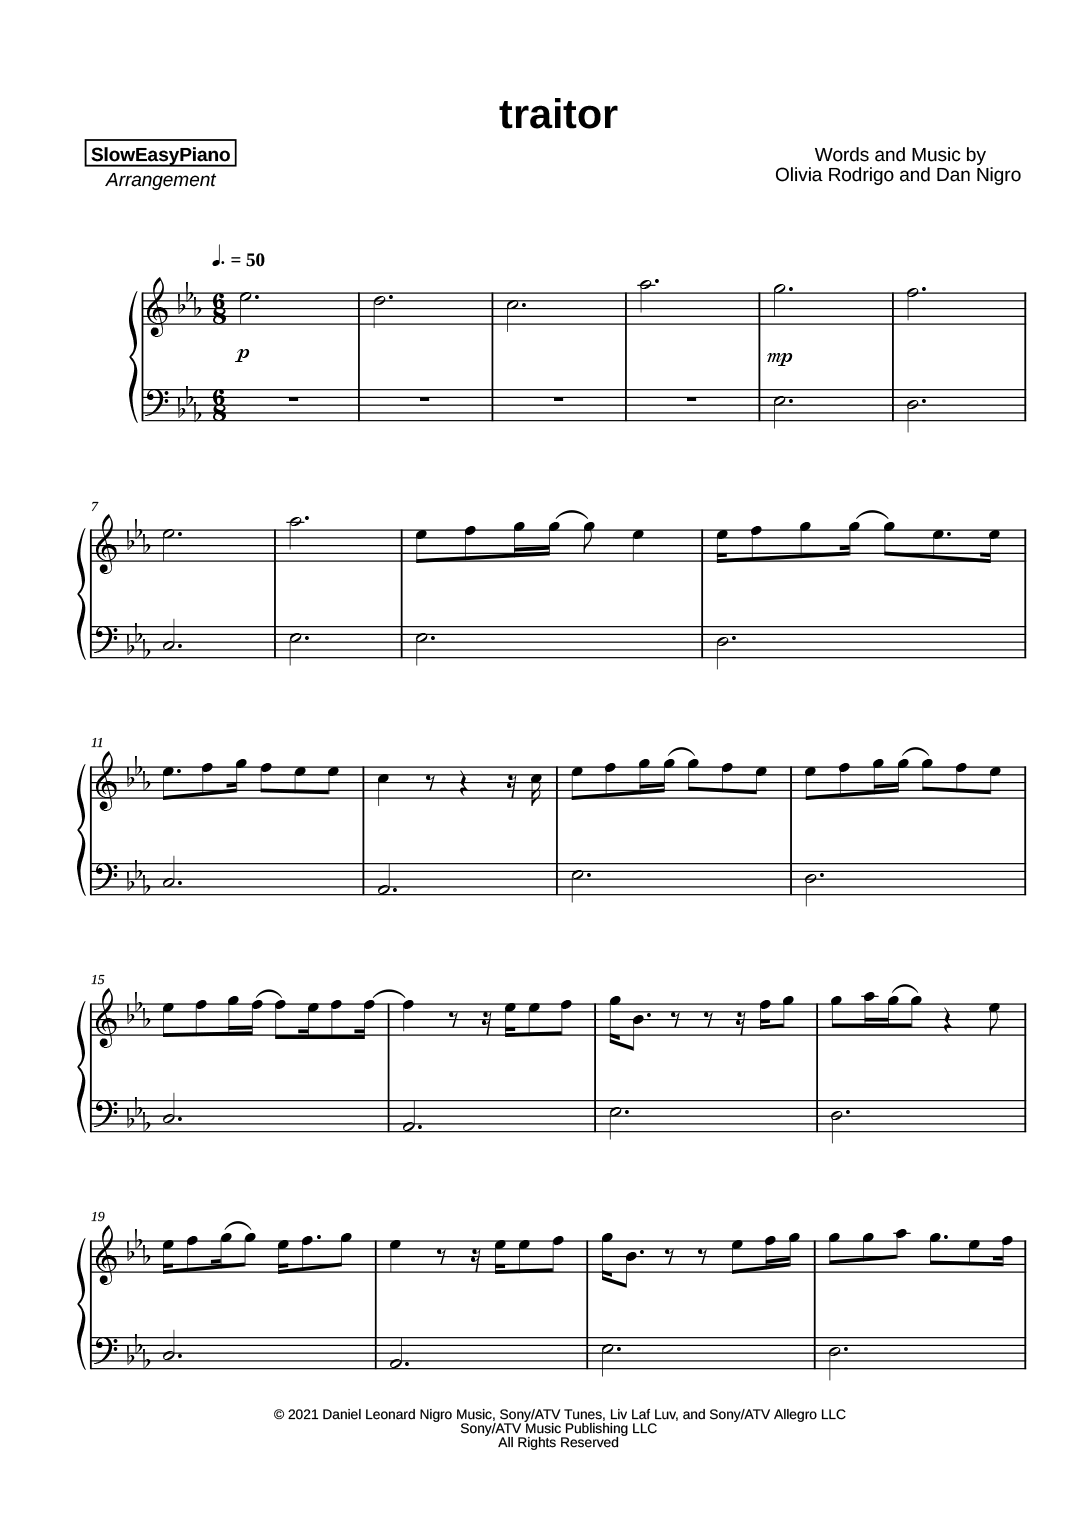 Olivia Rodrigo - traitor sheet music for piano download